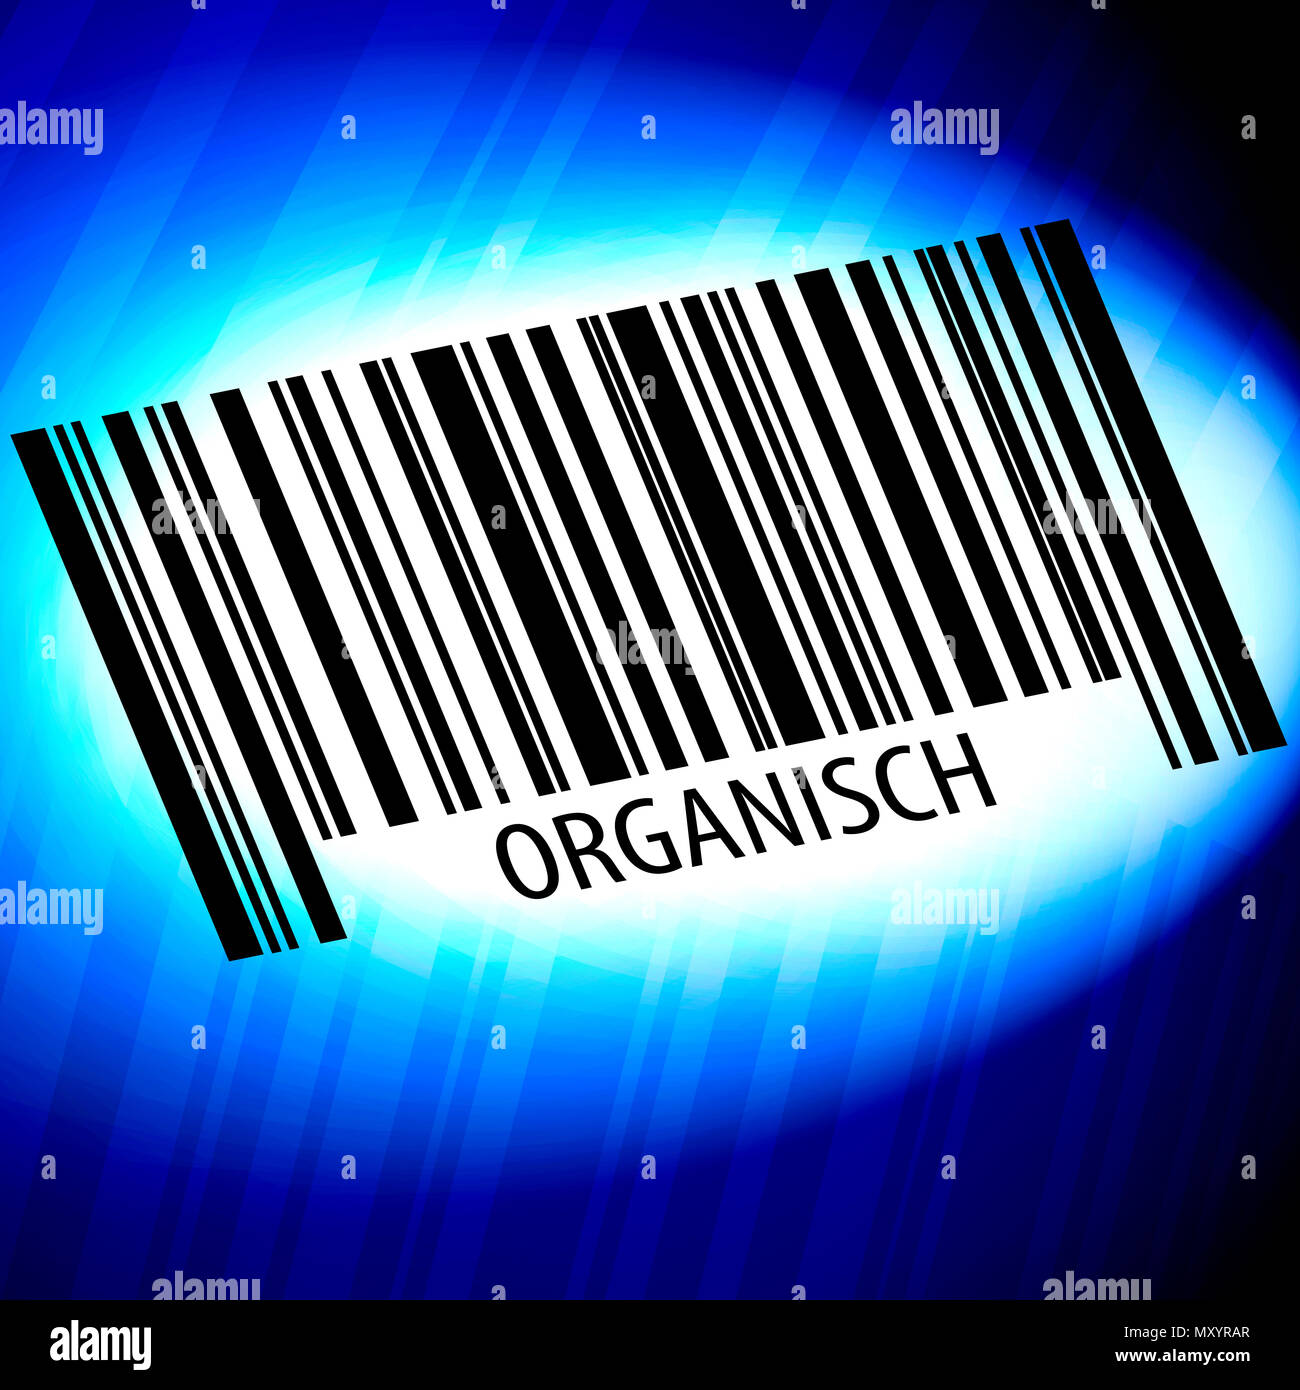 Organisch - barcode with blue Background Stock Photo